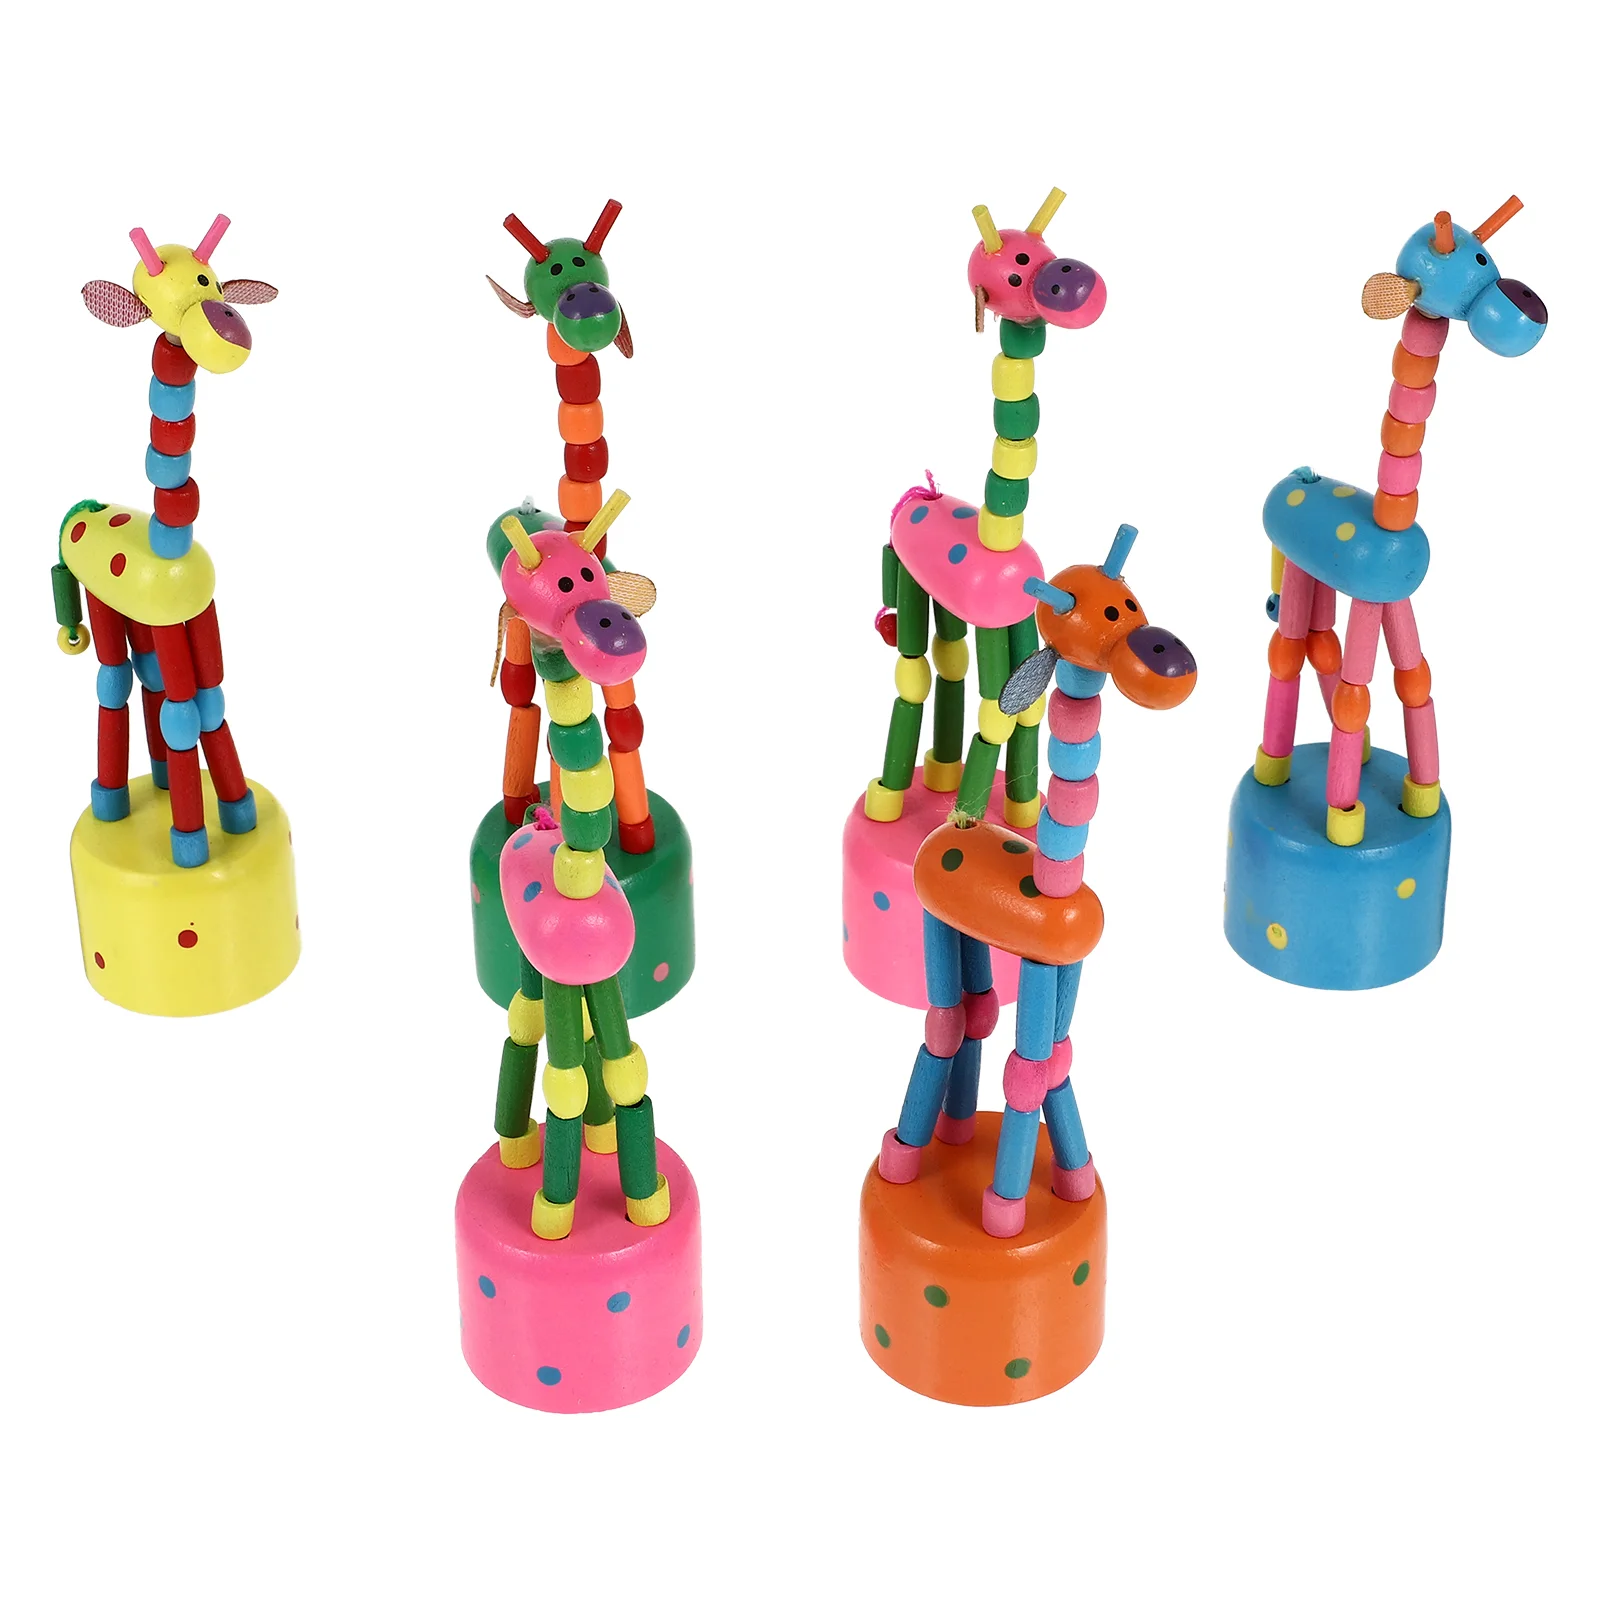 

3/5pcs Wooden Giraffe Puppets Toy Swing Dancing Standing Rocking Giraffe Push Up Toy Kids Intelligence Toy Random Pattern